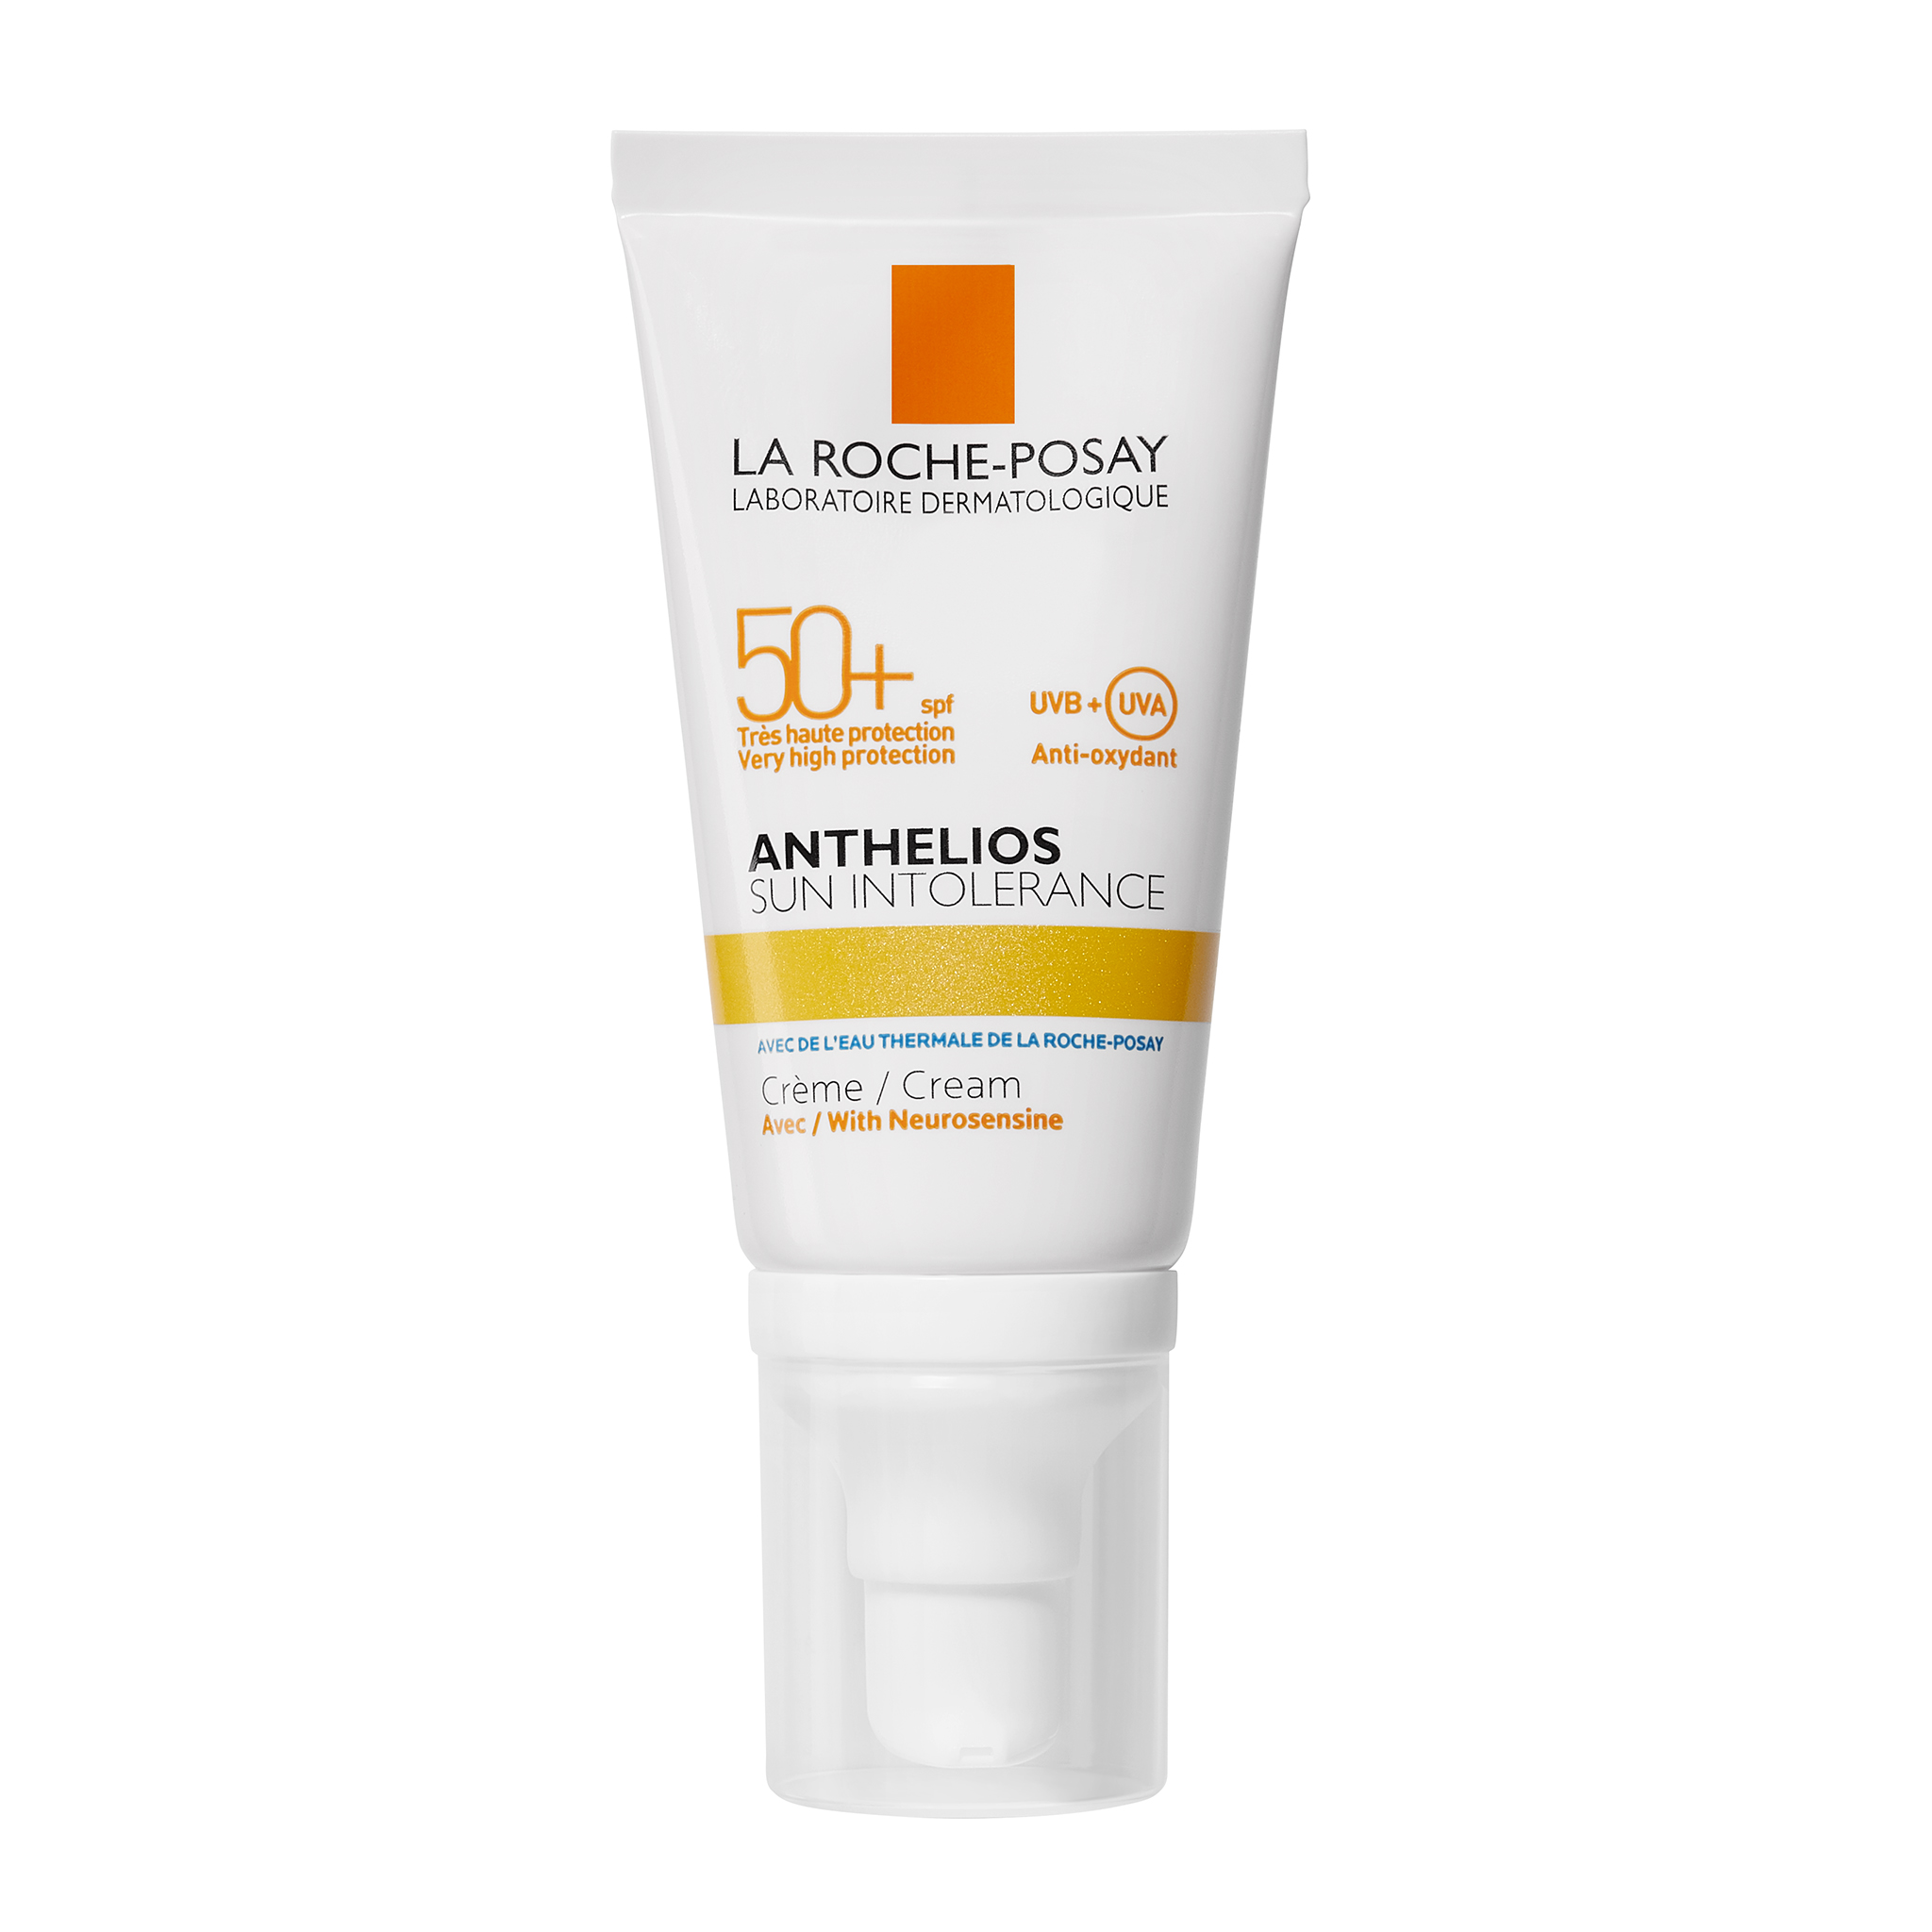 La Roche- Posay Anthelios SPF50+ / UVA-PPD 39 napvédő krém napérzékeny bőrre 50 ml képe